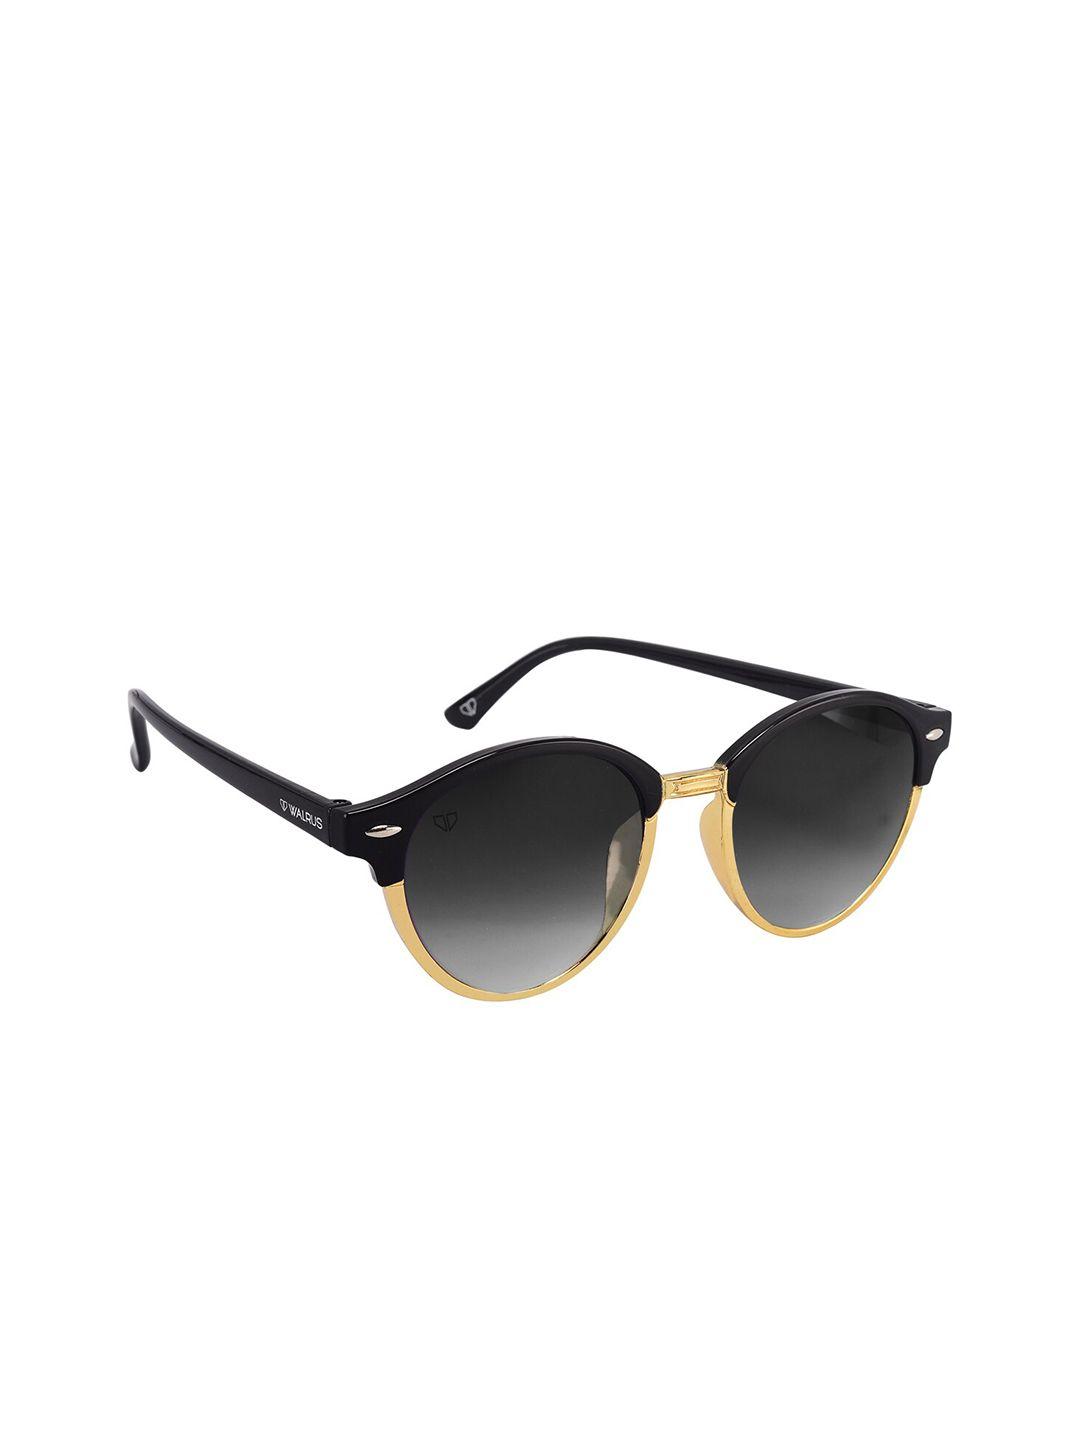 walrus men black lens & gold-toned round sunglasses wsgm-james-iii-020602-black